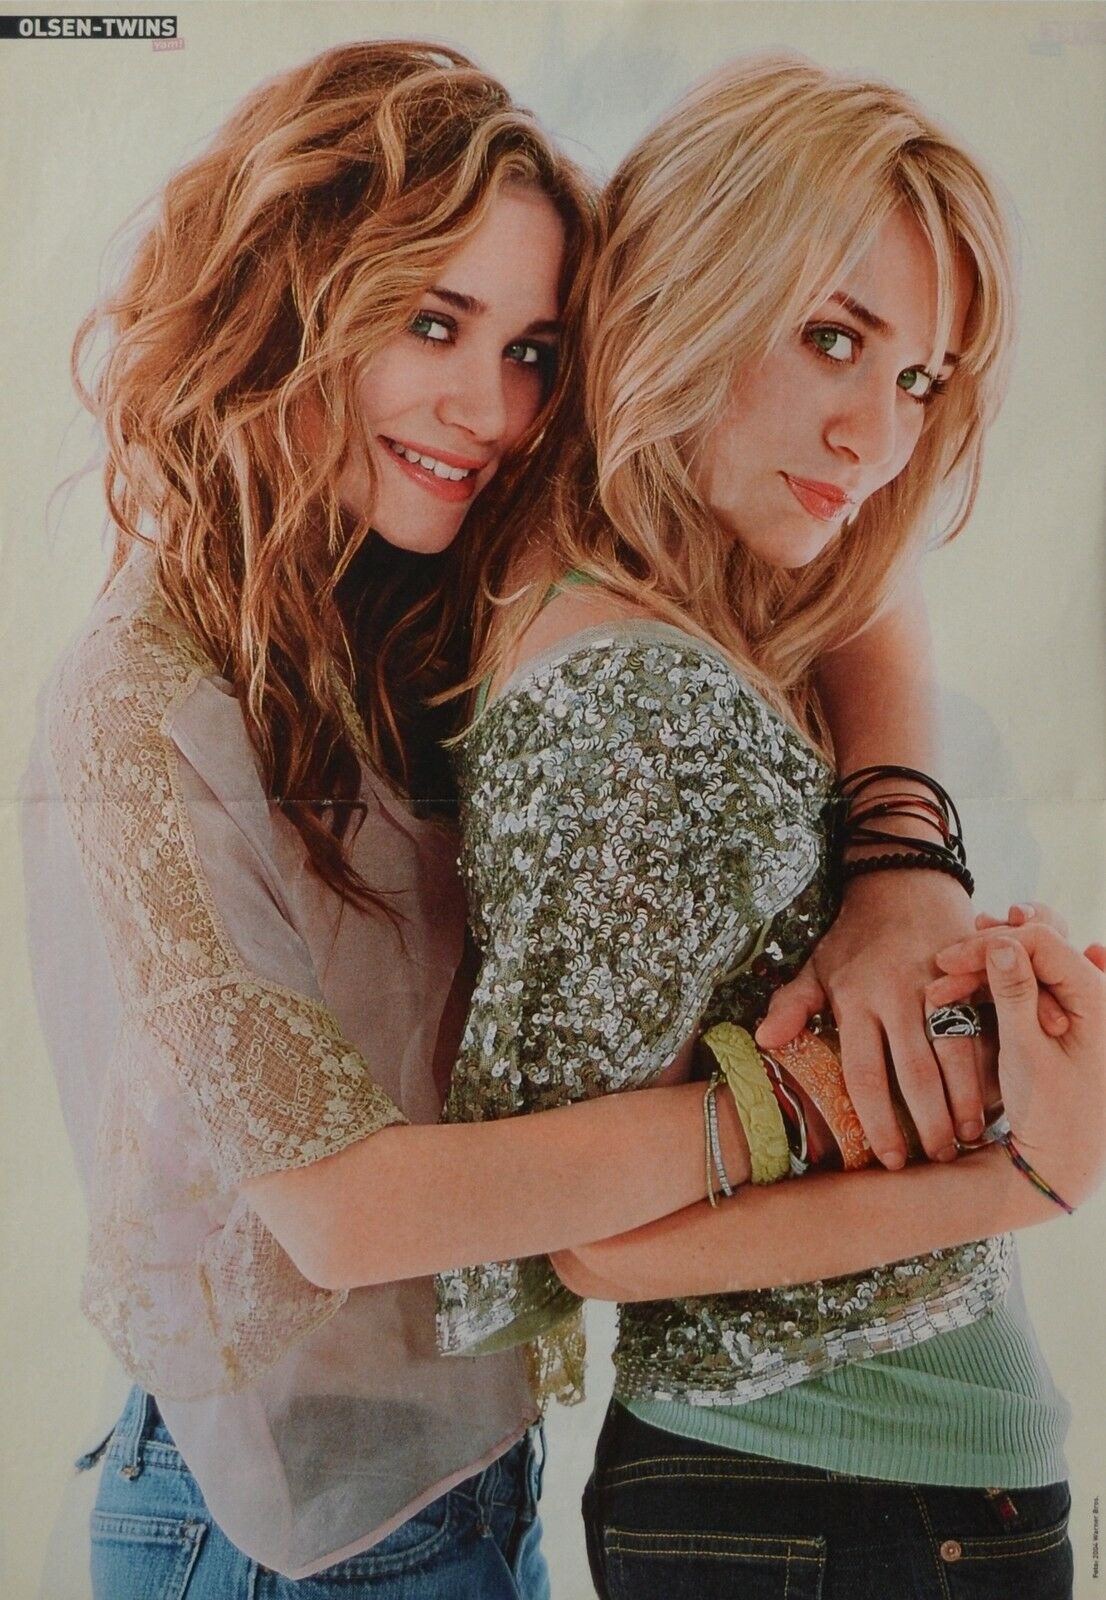 The Olsen Twins hugging